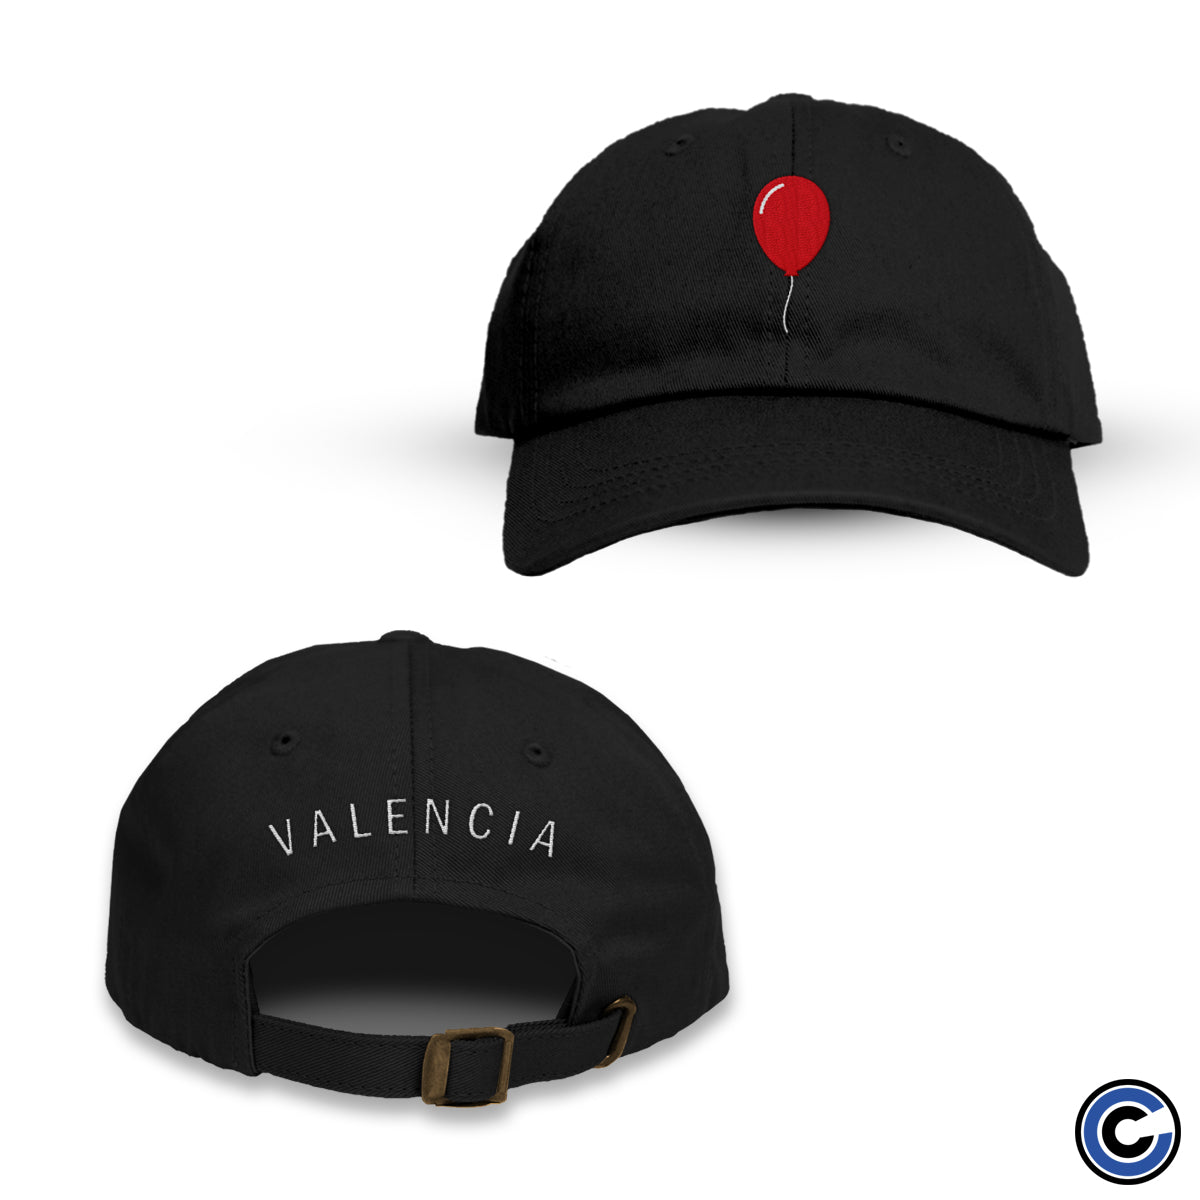 Valencia "Balloon" Hat